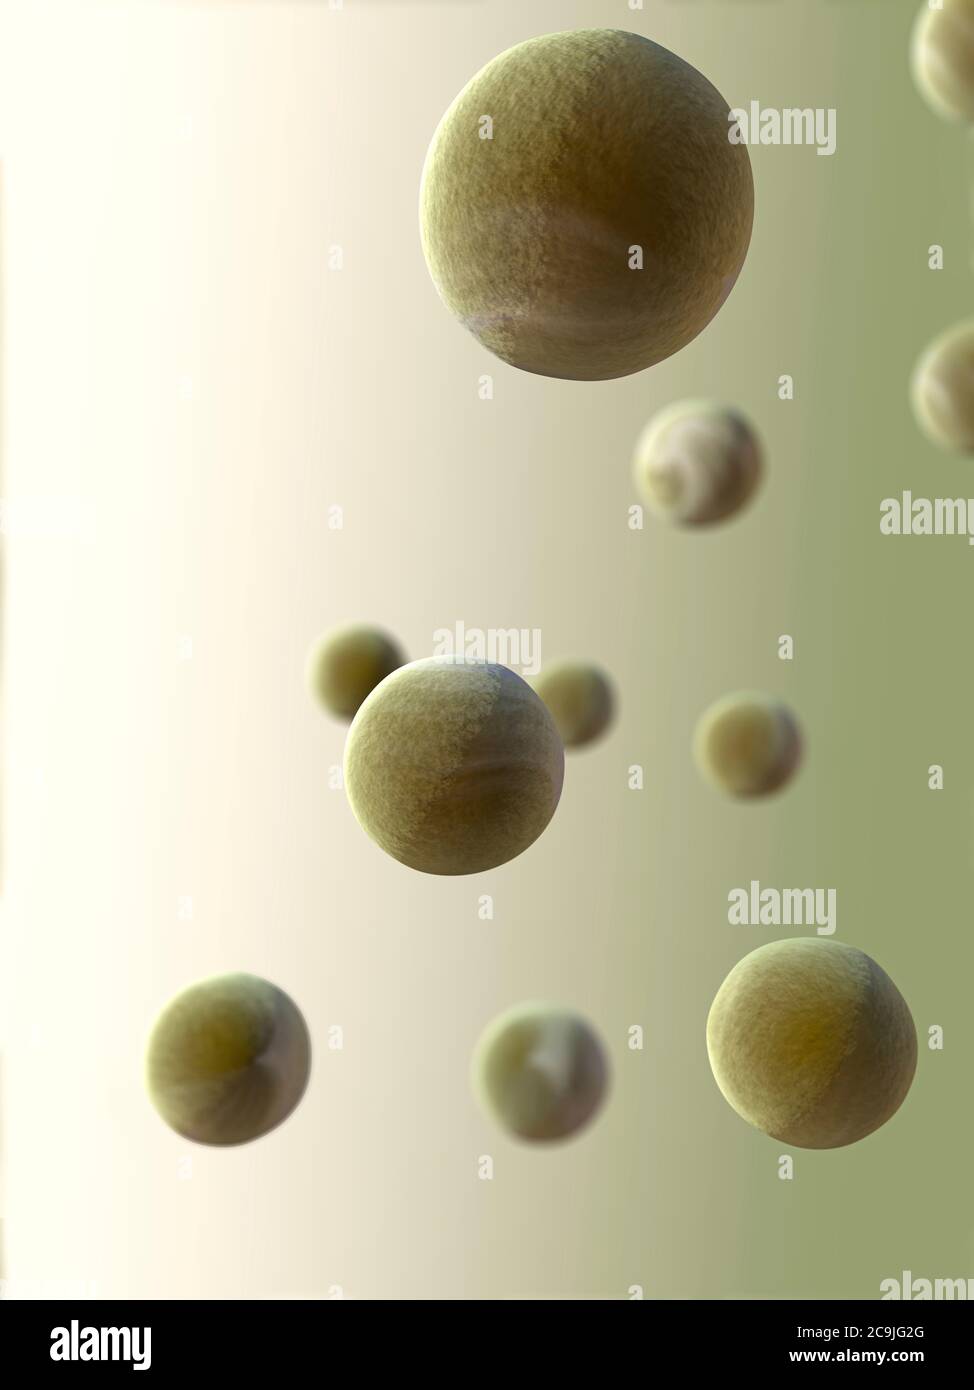 Floating spheres, illustration. Stock Photo